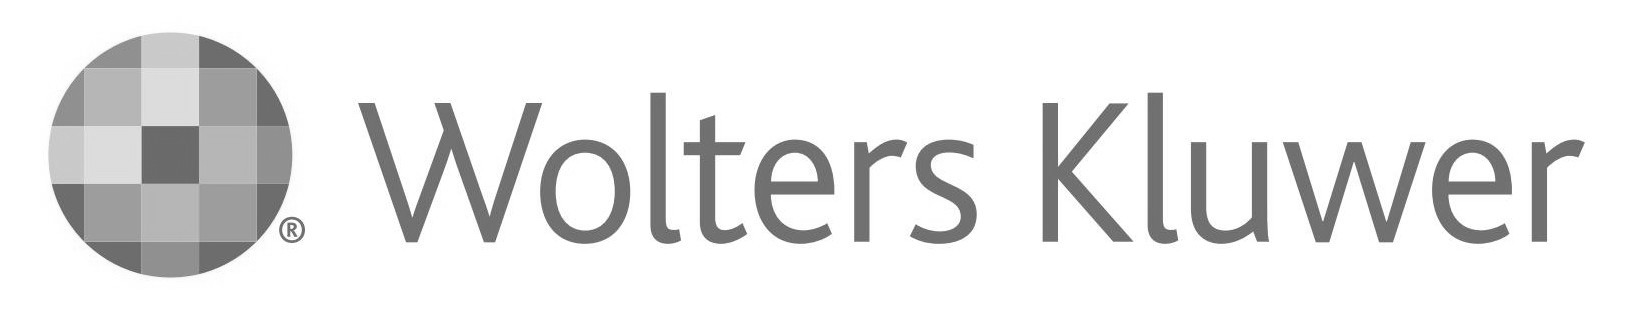 Wolters-Kluwer-logo.jpg